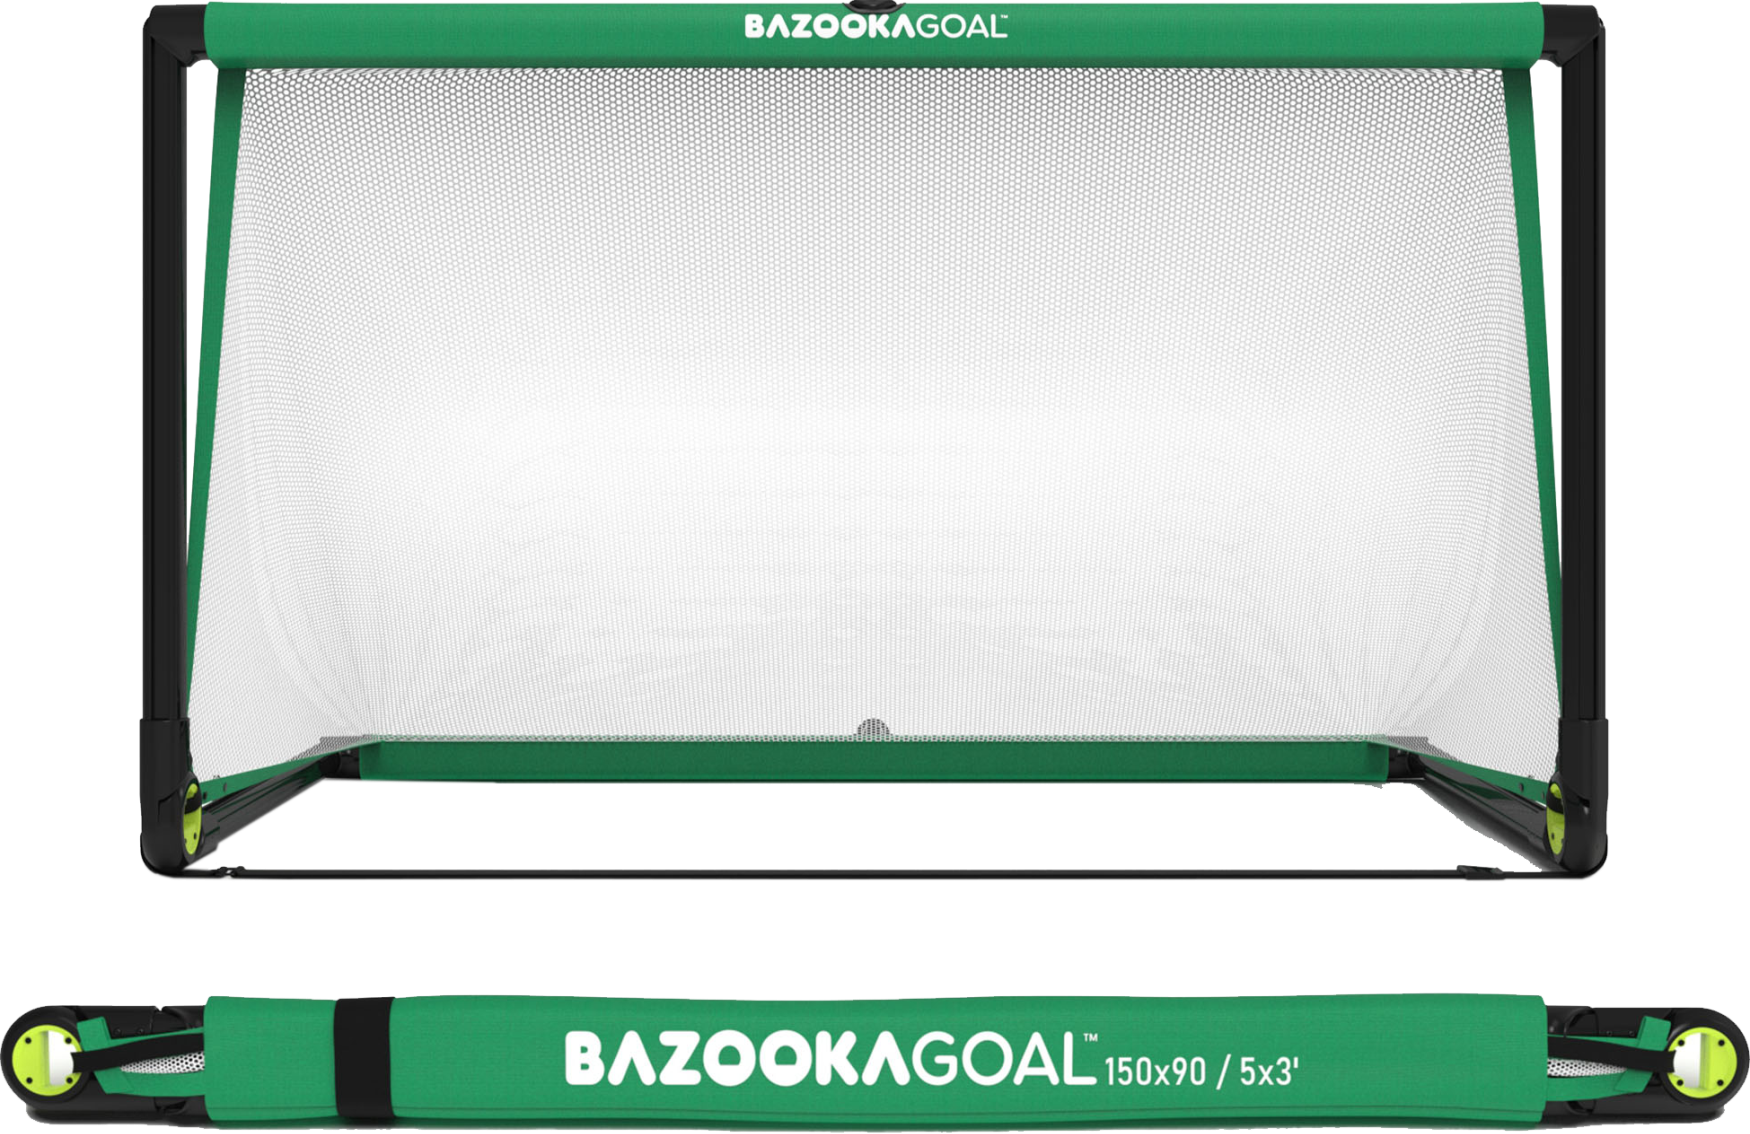 Football Goal BAZOOKAGOAL Teleskoptor 150x90 cm